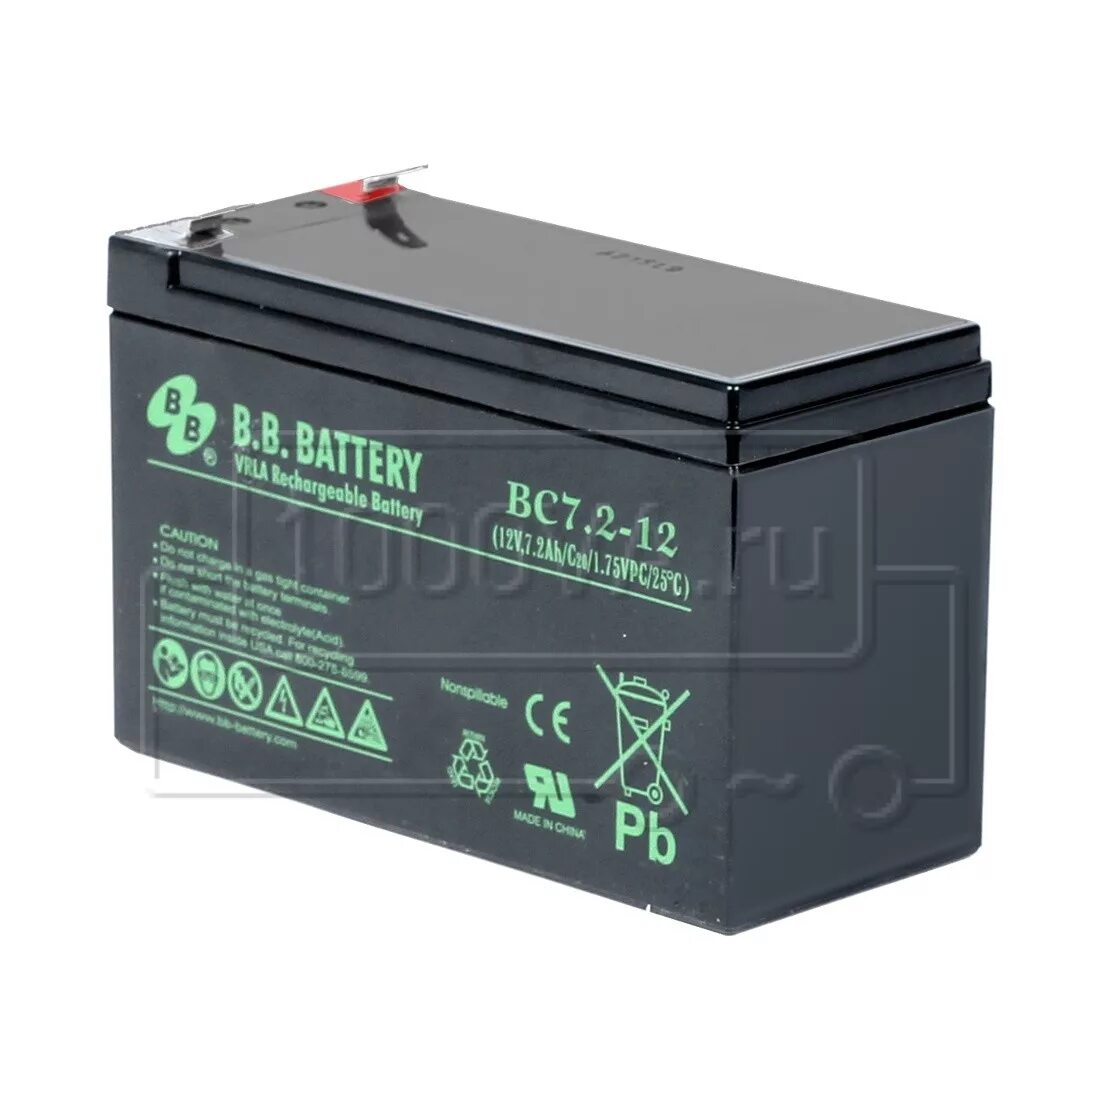 Battery bc 12 12. Аккумулятор BB Battery BC 7.2-12. Батарея BB Battery 12в. Аккумулятор vim АКБ 12 - 40. B.B. Battery BC7.2-12 12в 7.2 а·ч b.b. Battery.